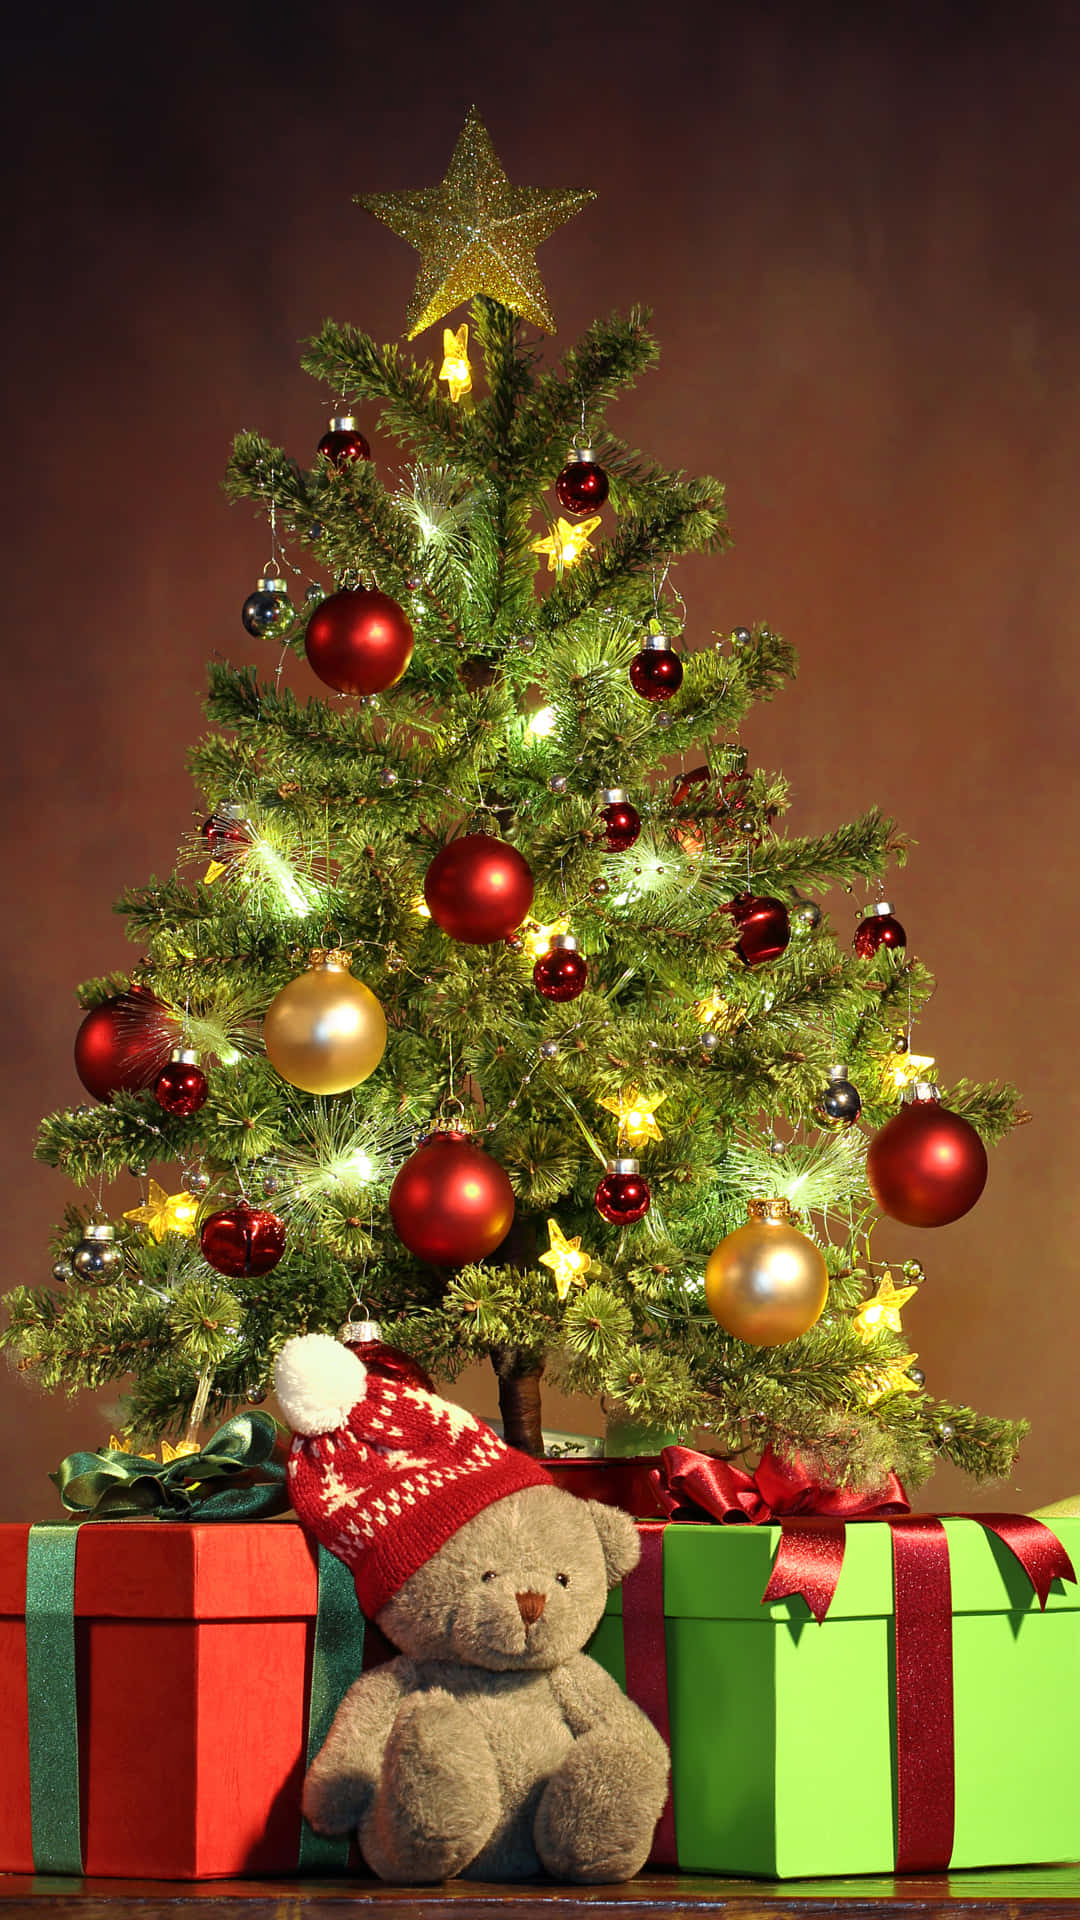 Festive Christmas Tree With Giftsand Teddy Bear.jpg Wallpaper